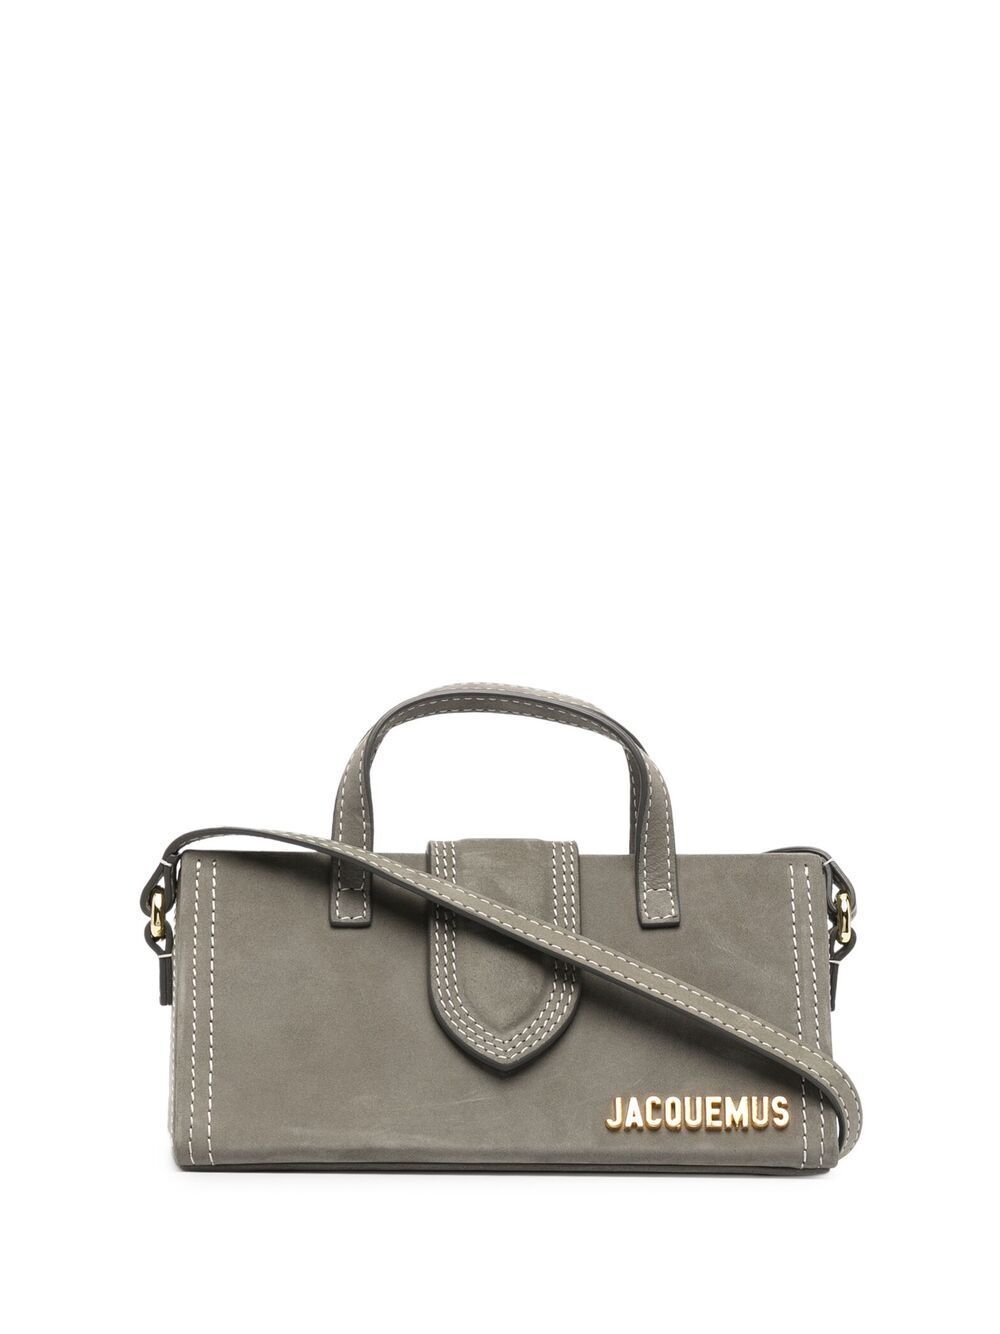 Jacquemus Le Porte Lunettes Tote Bag - Farfetch | Farfetch (US)